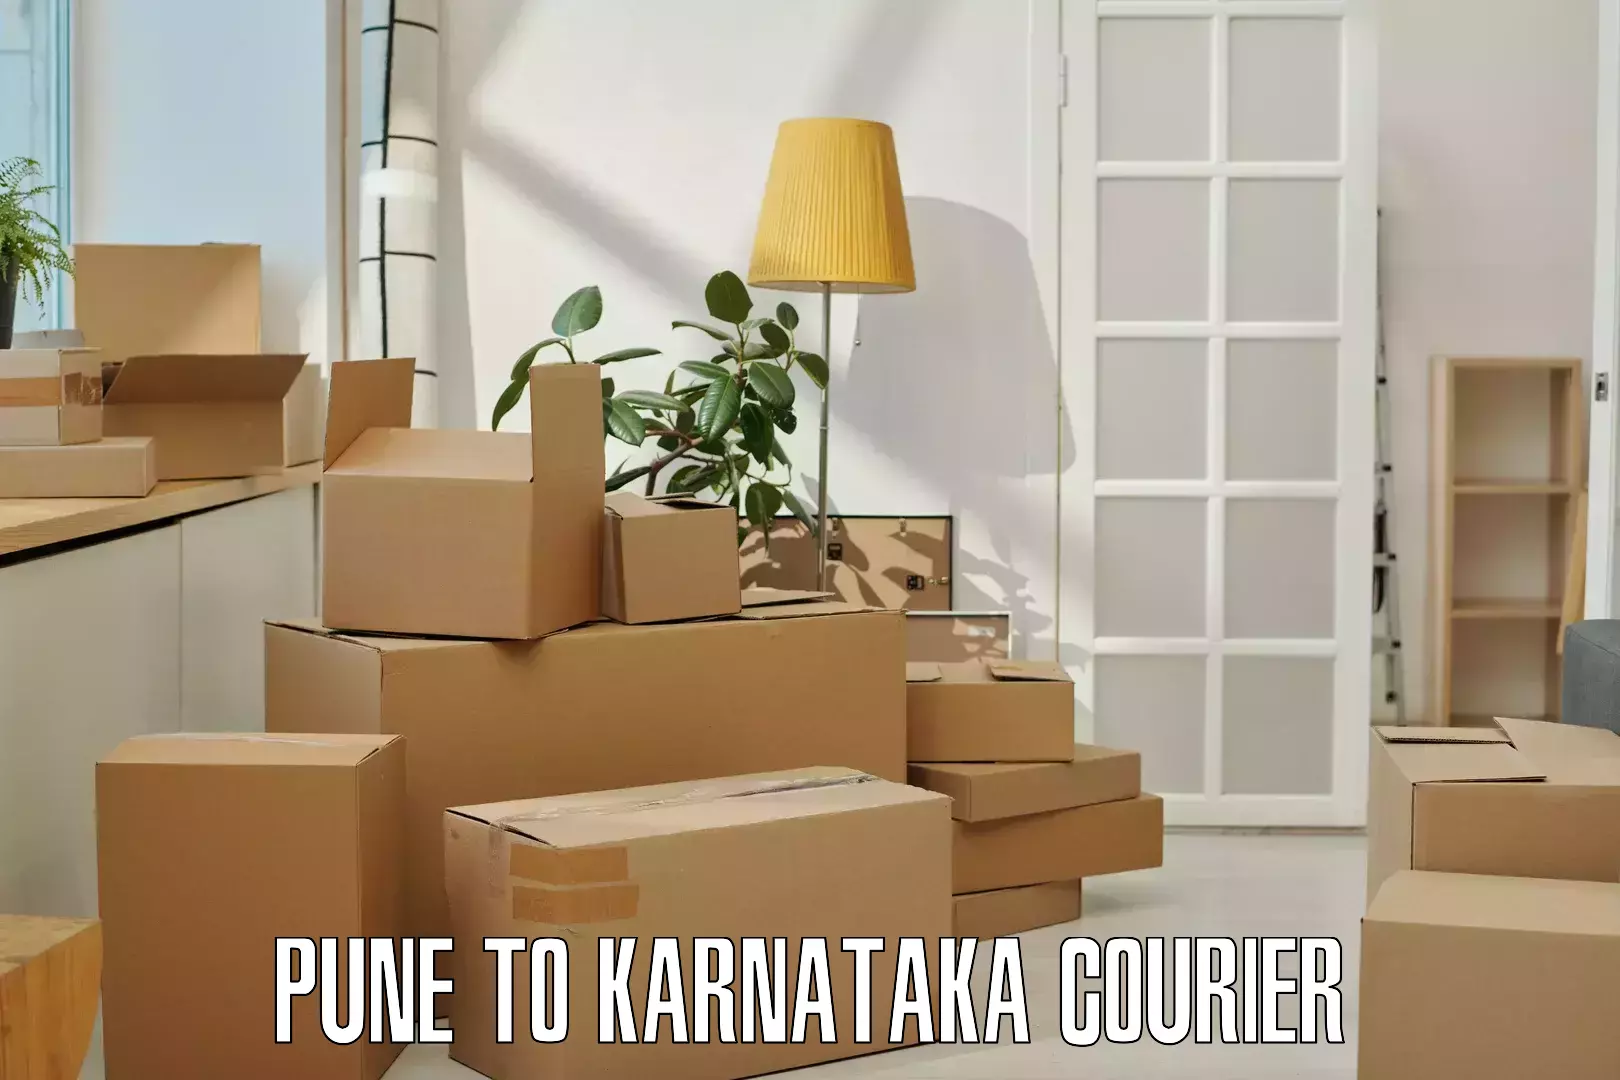 Full-service courier options Pune to Karnataka